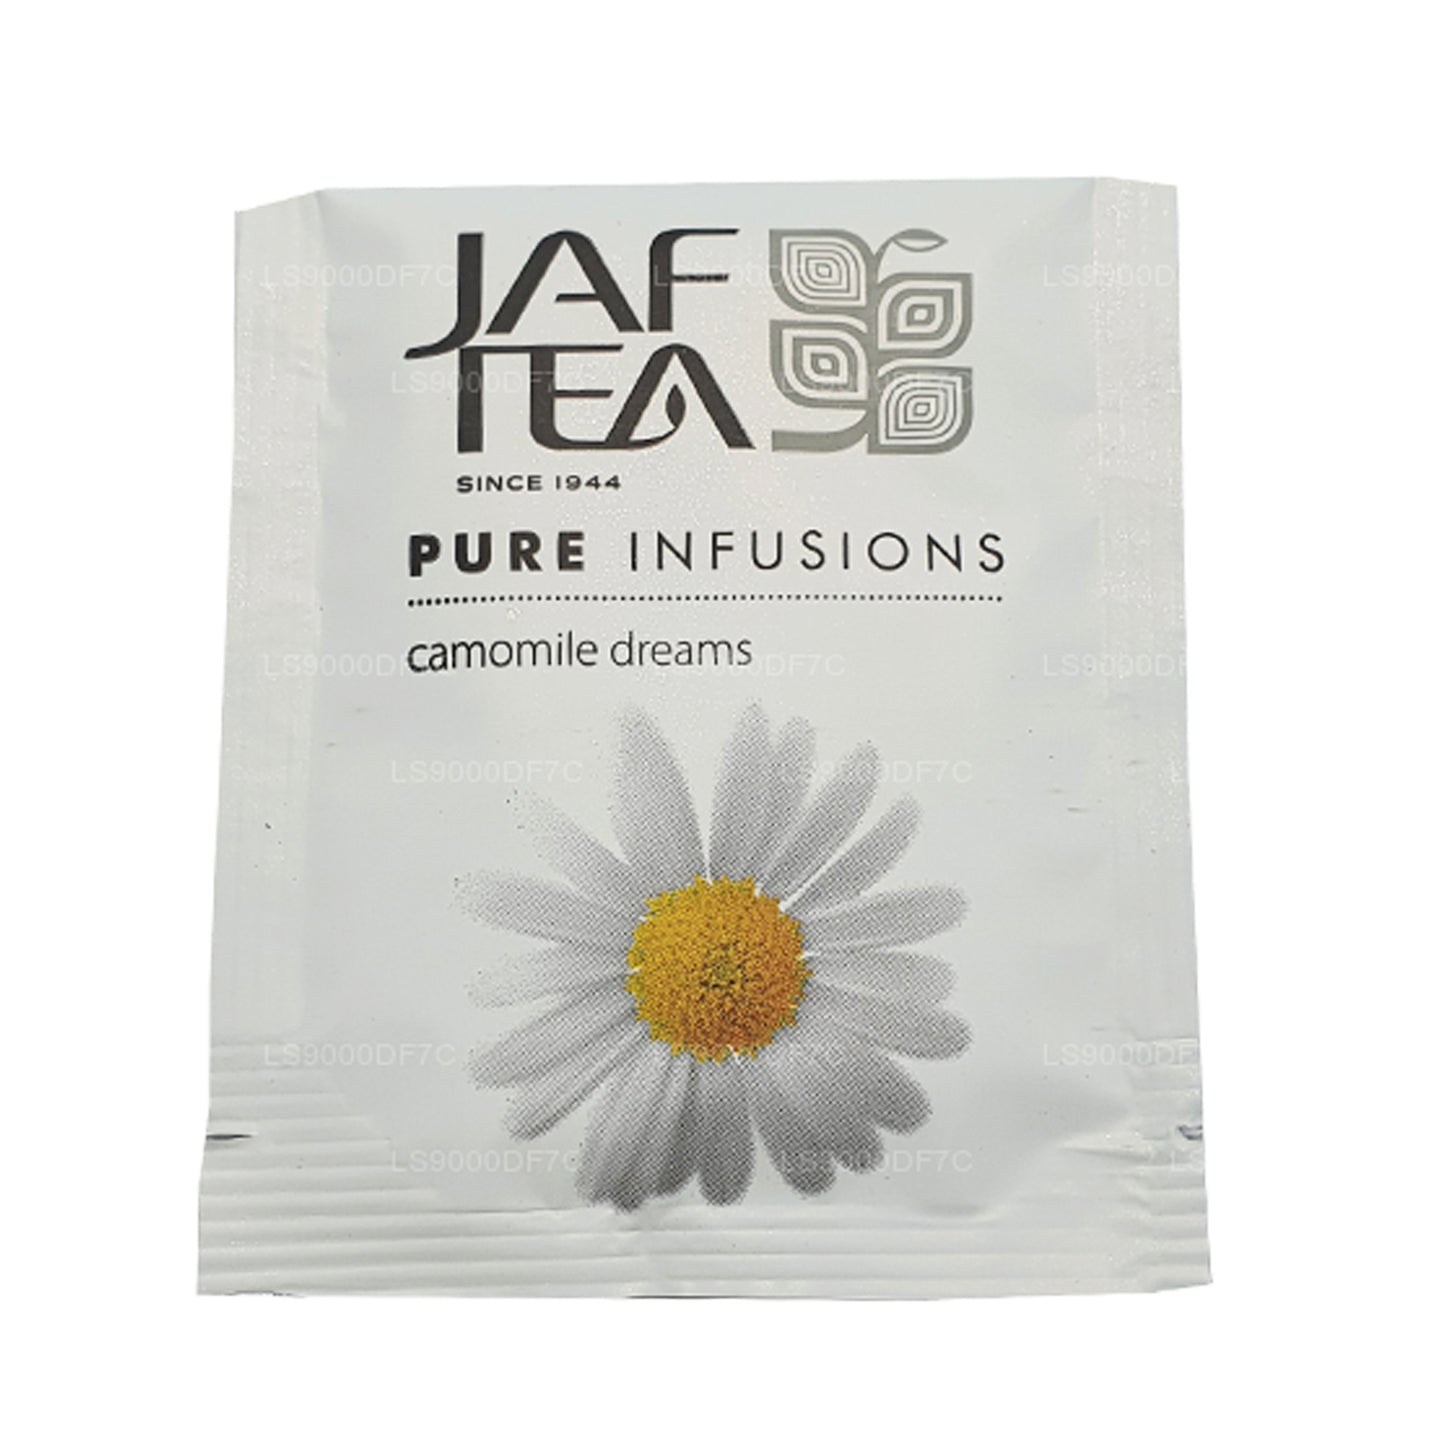 Jaf Tea Pure Teas and Infusions Foil Envelop Tea Bags (145g)